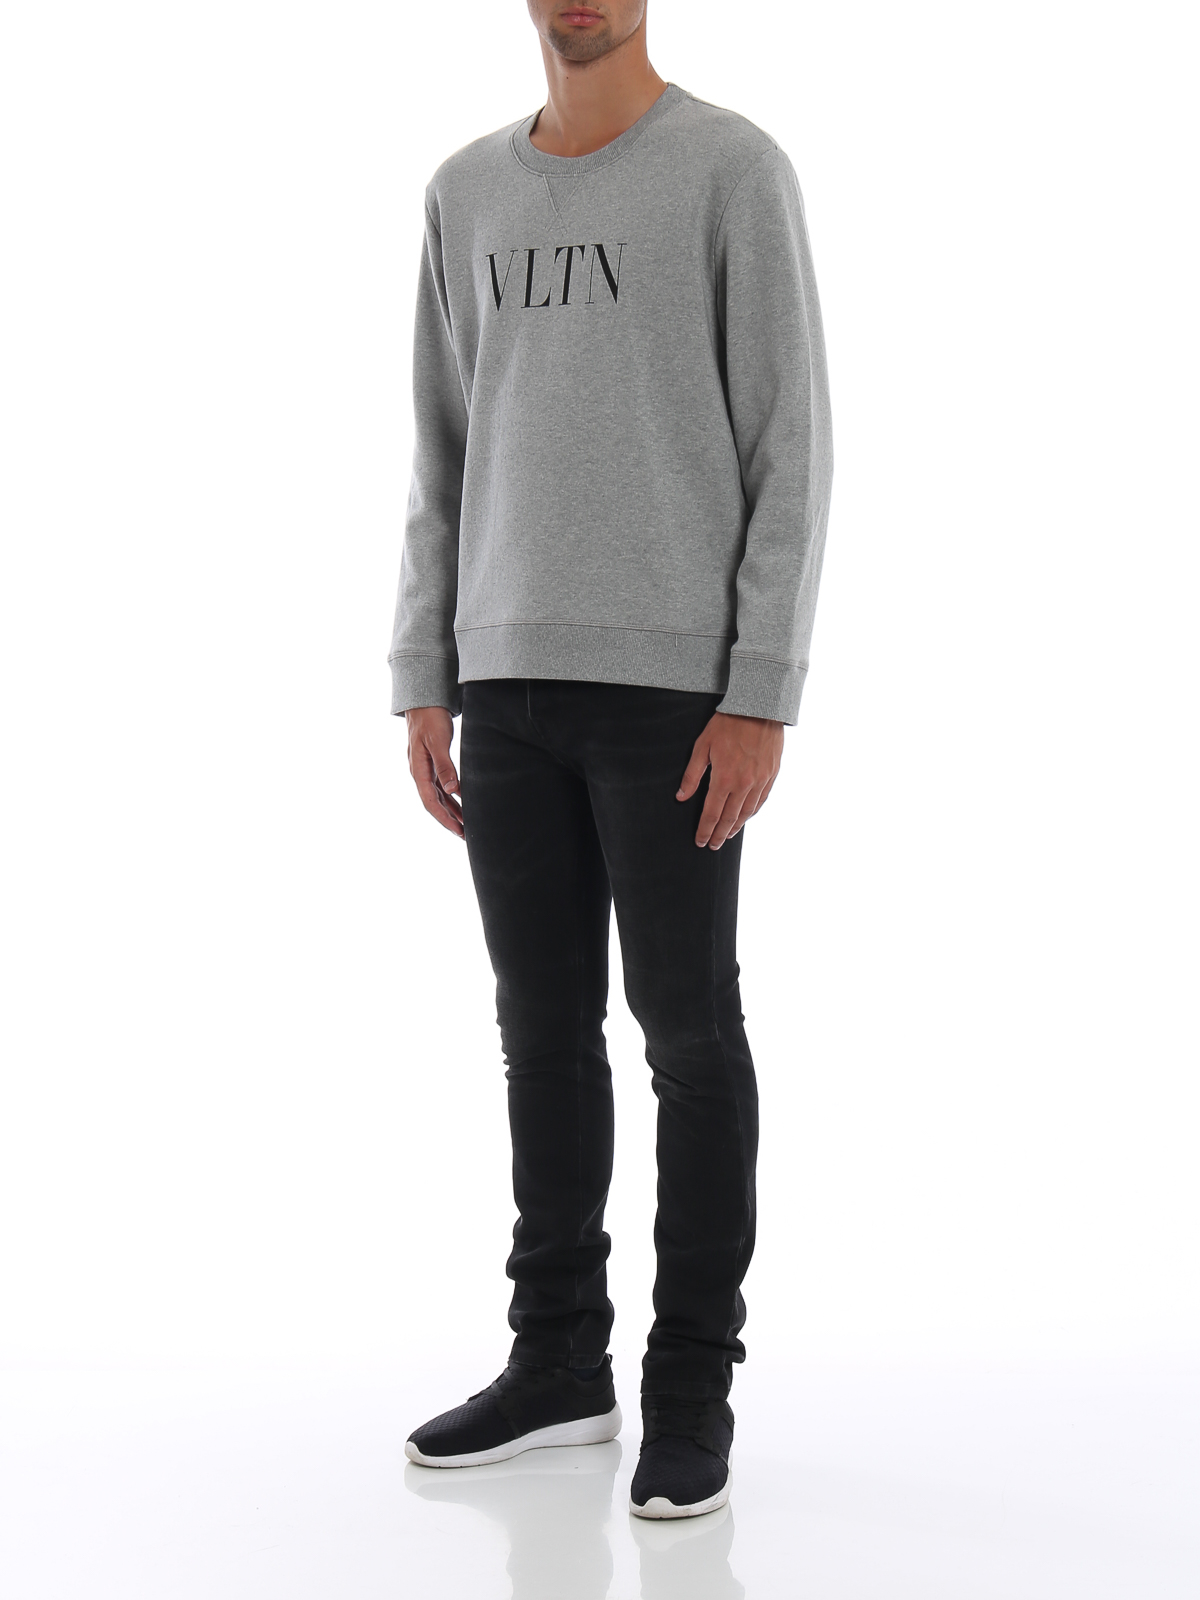 Sweatshirts & Sweaters Valentino - VLTN print melange jersey 